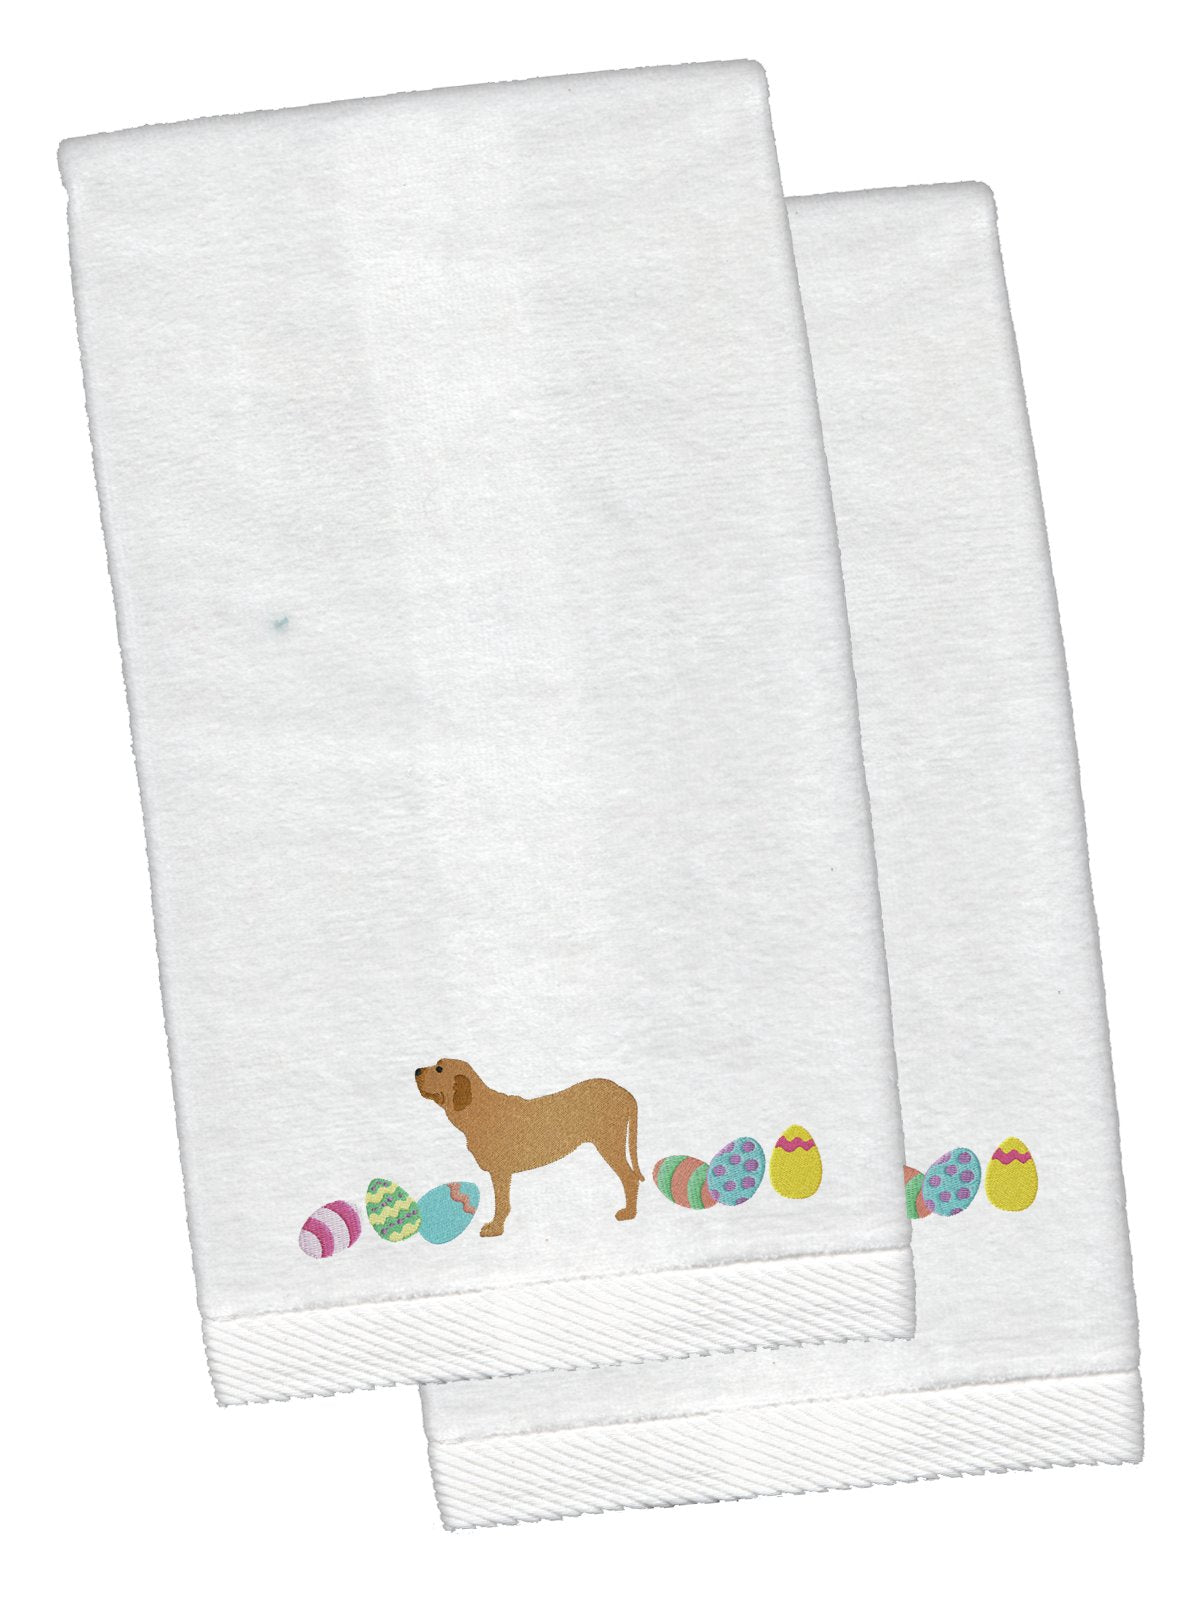 Fila Brasileiro Easter White Embroidered Plush Hand Towel Set of 2 CK1641KTEMB by Caroline's Treasures